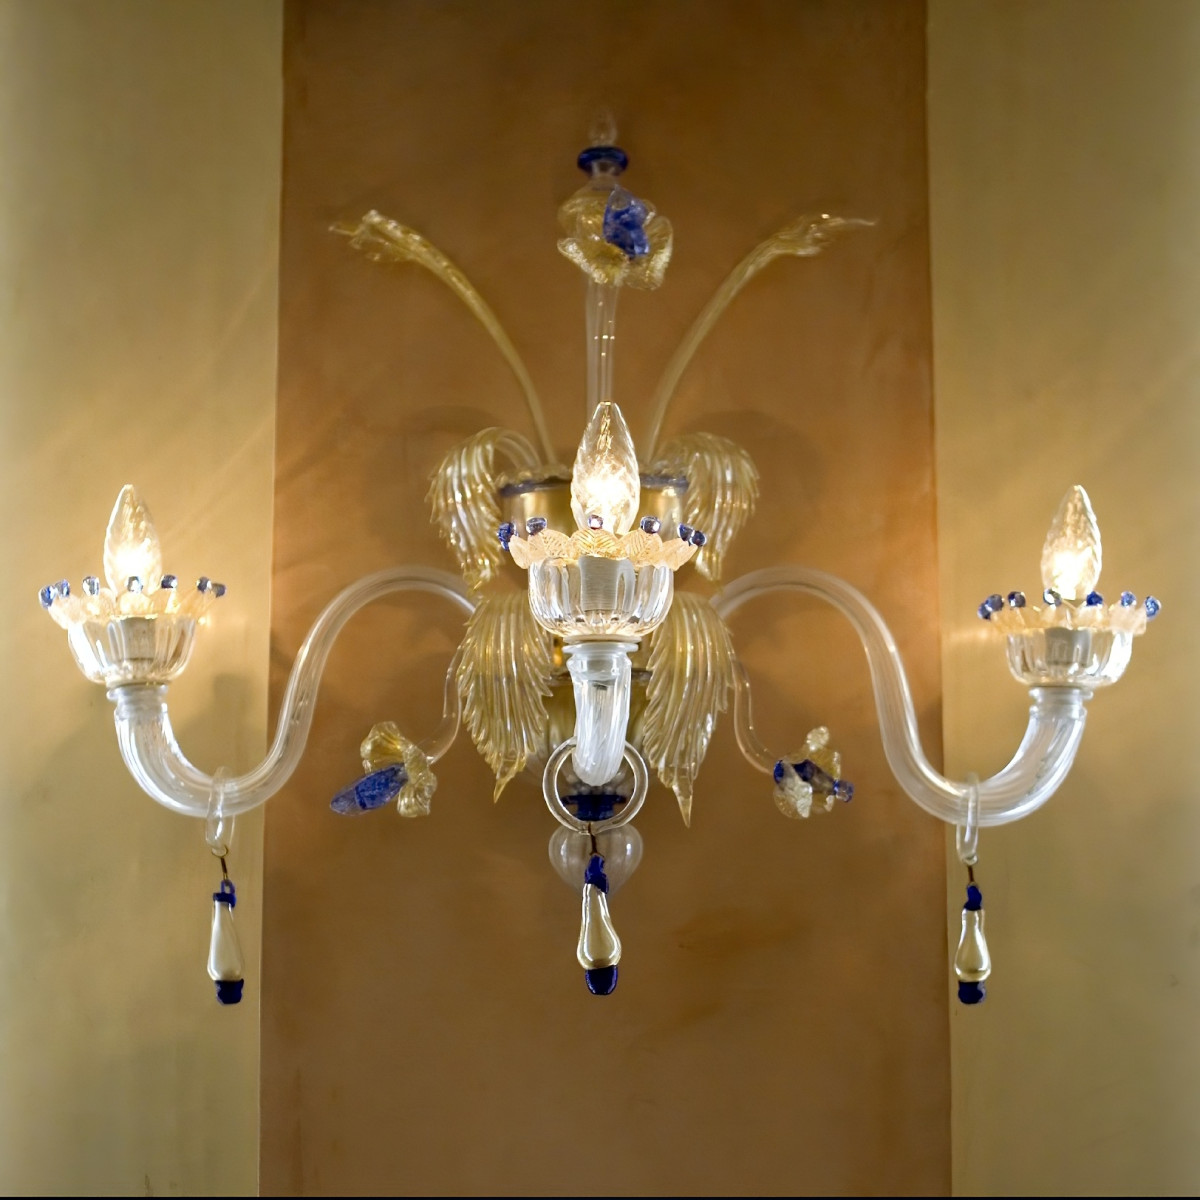 Allegro 3 leichte Murano Wandleuchte - transparent gold blau farbe